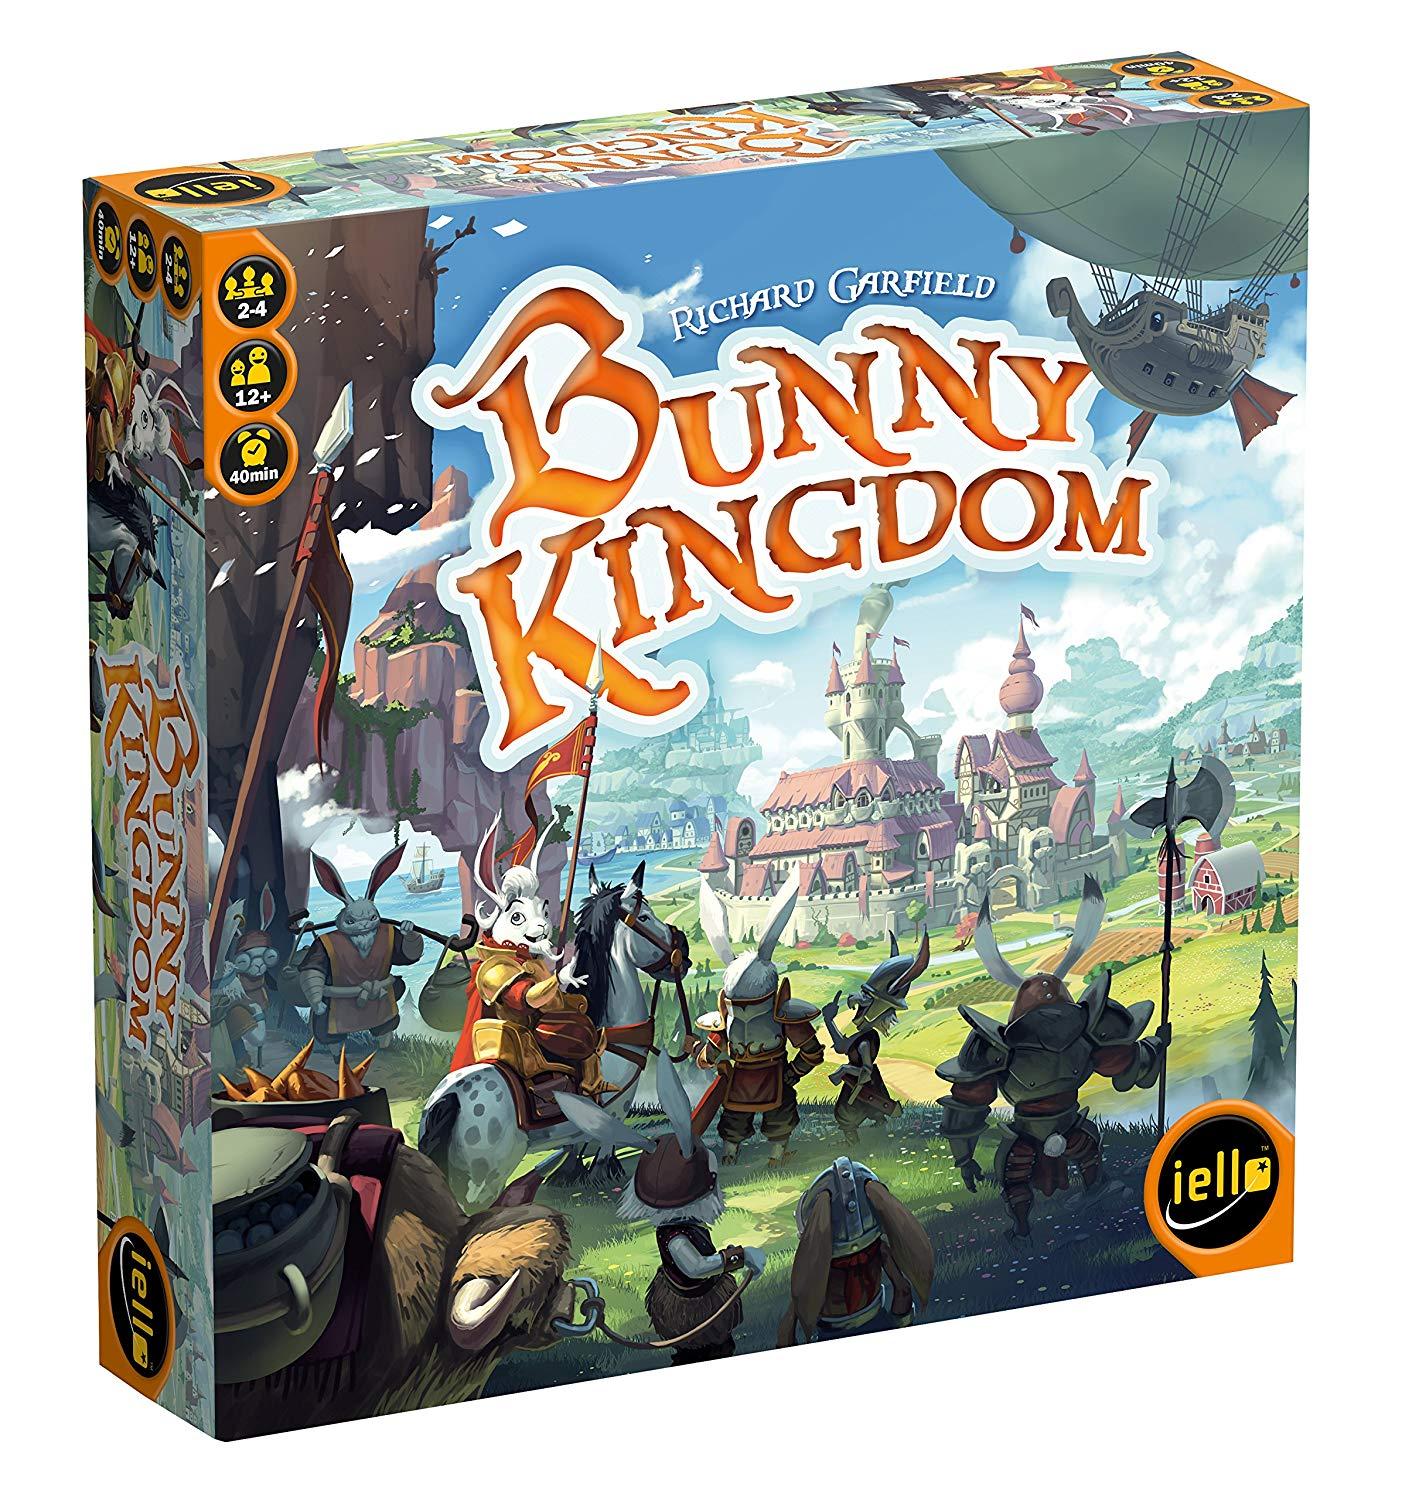 Bunny Kingdom Spielanleitung – PDF Download